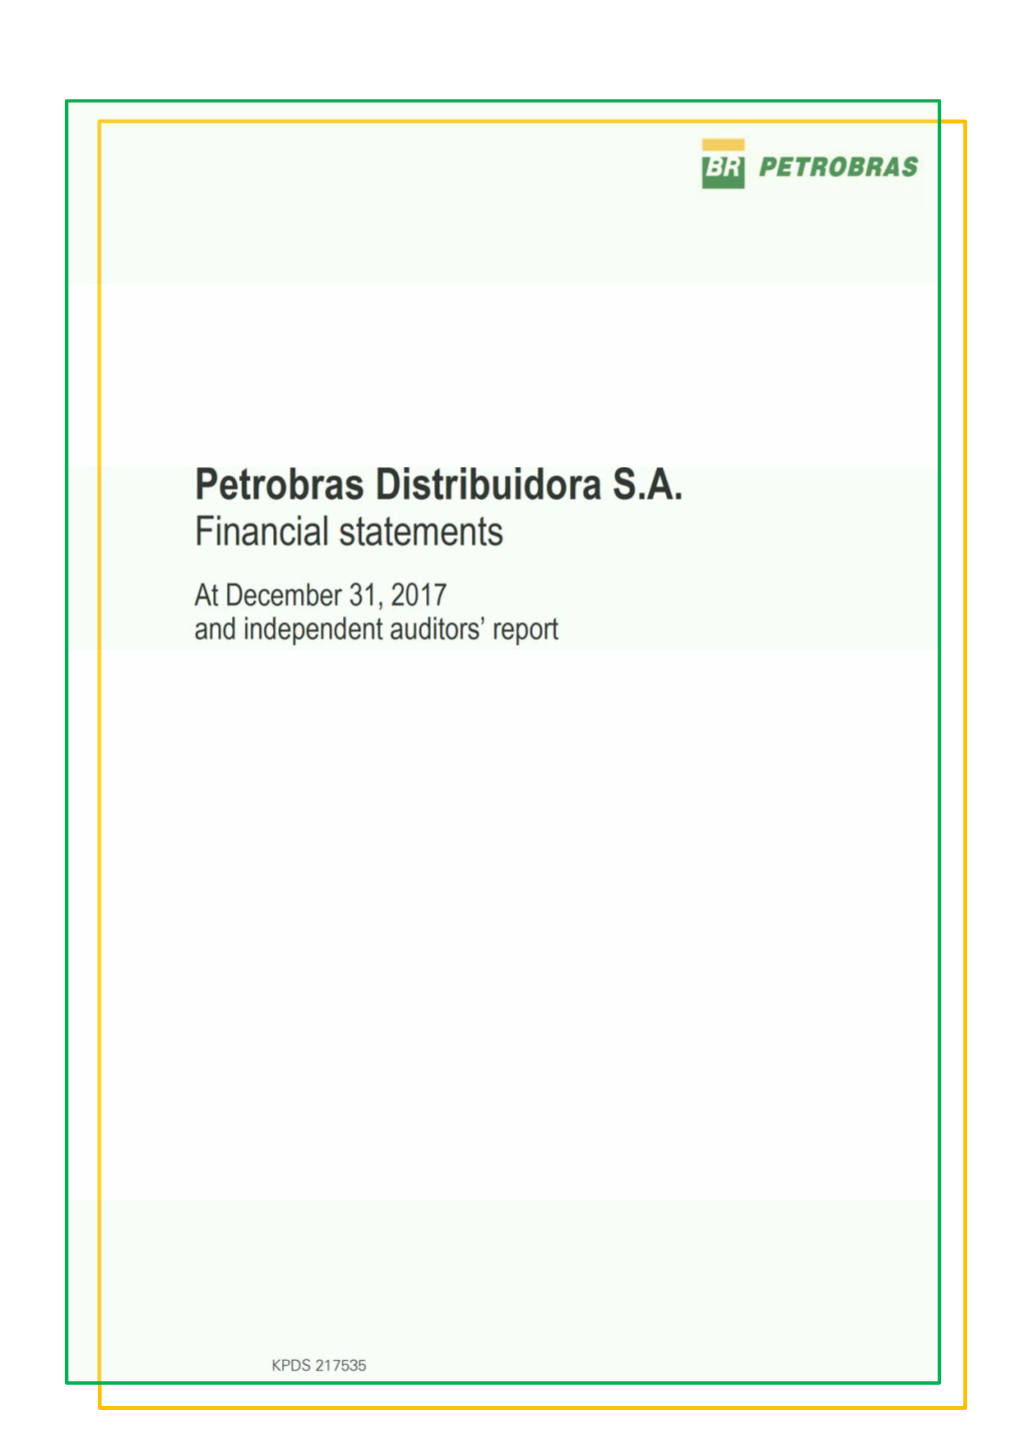 Petrobras Distribuidora S.A. Financial Statements